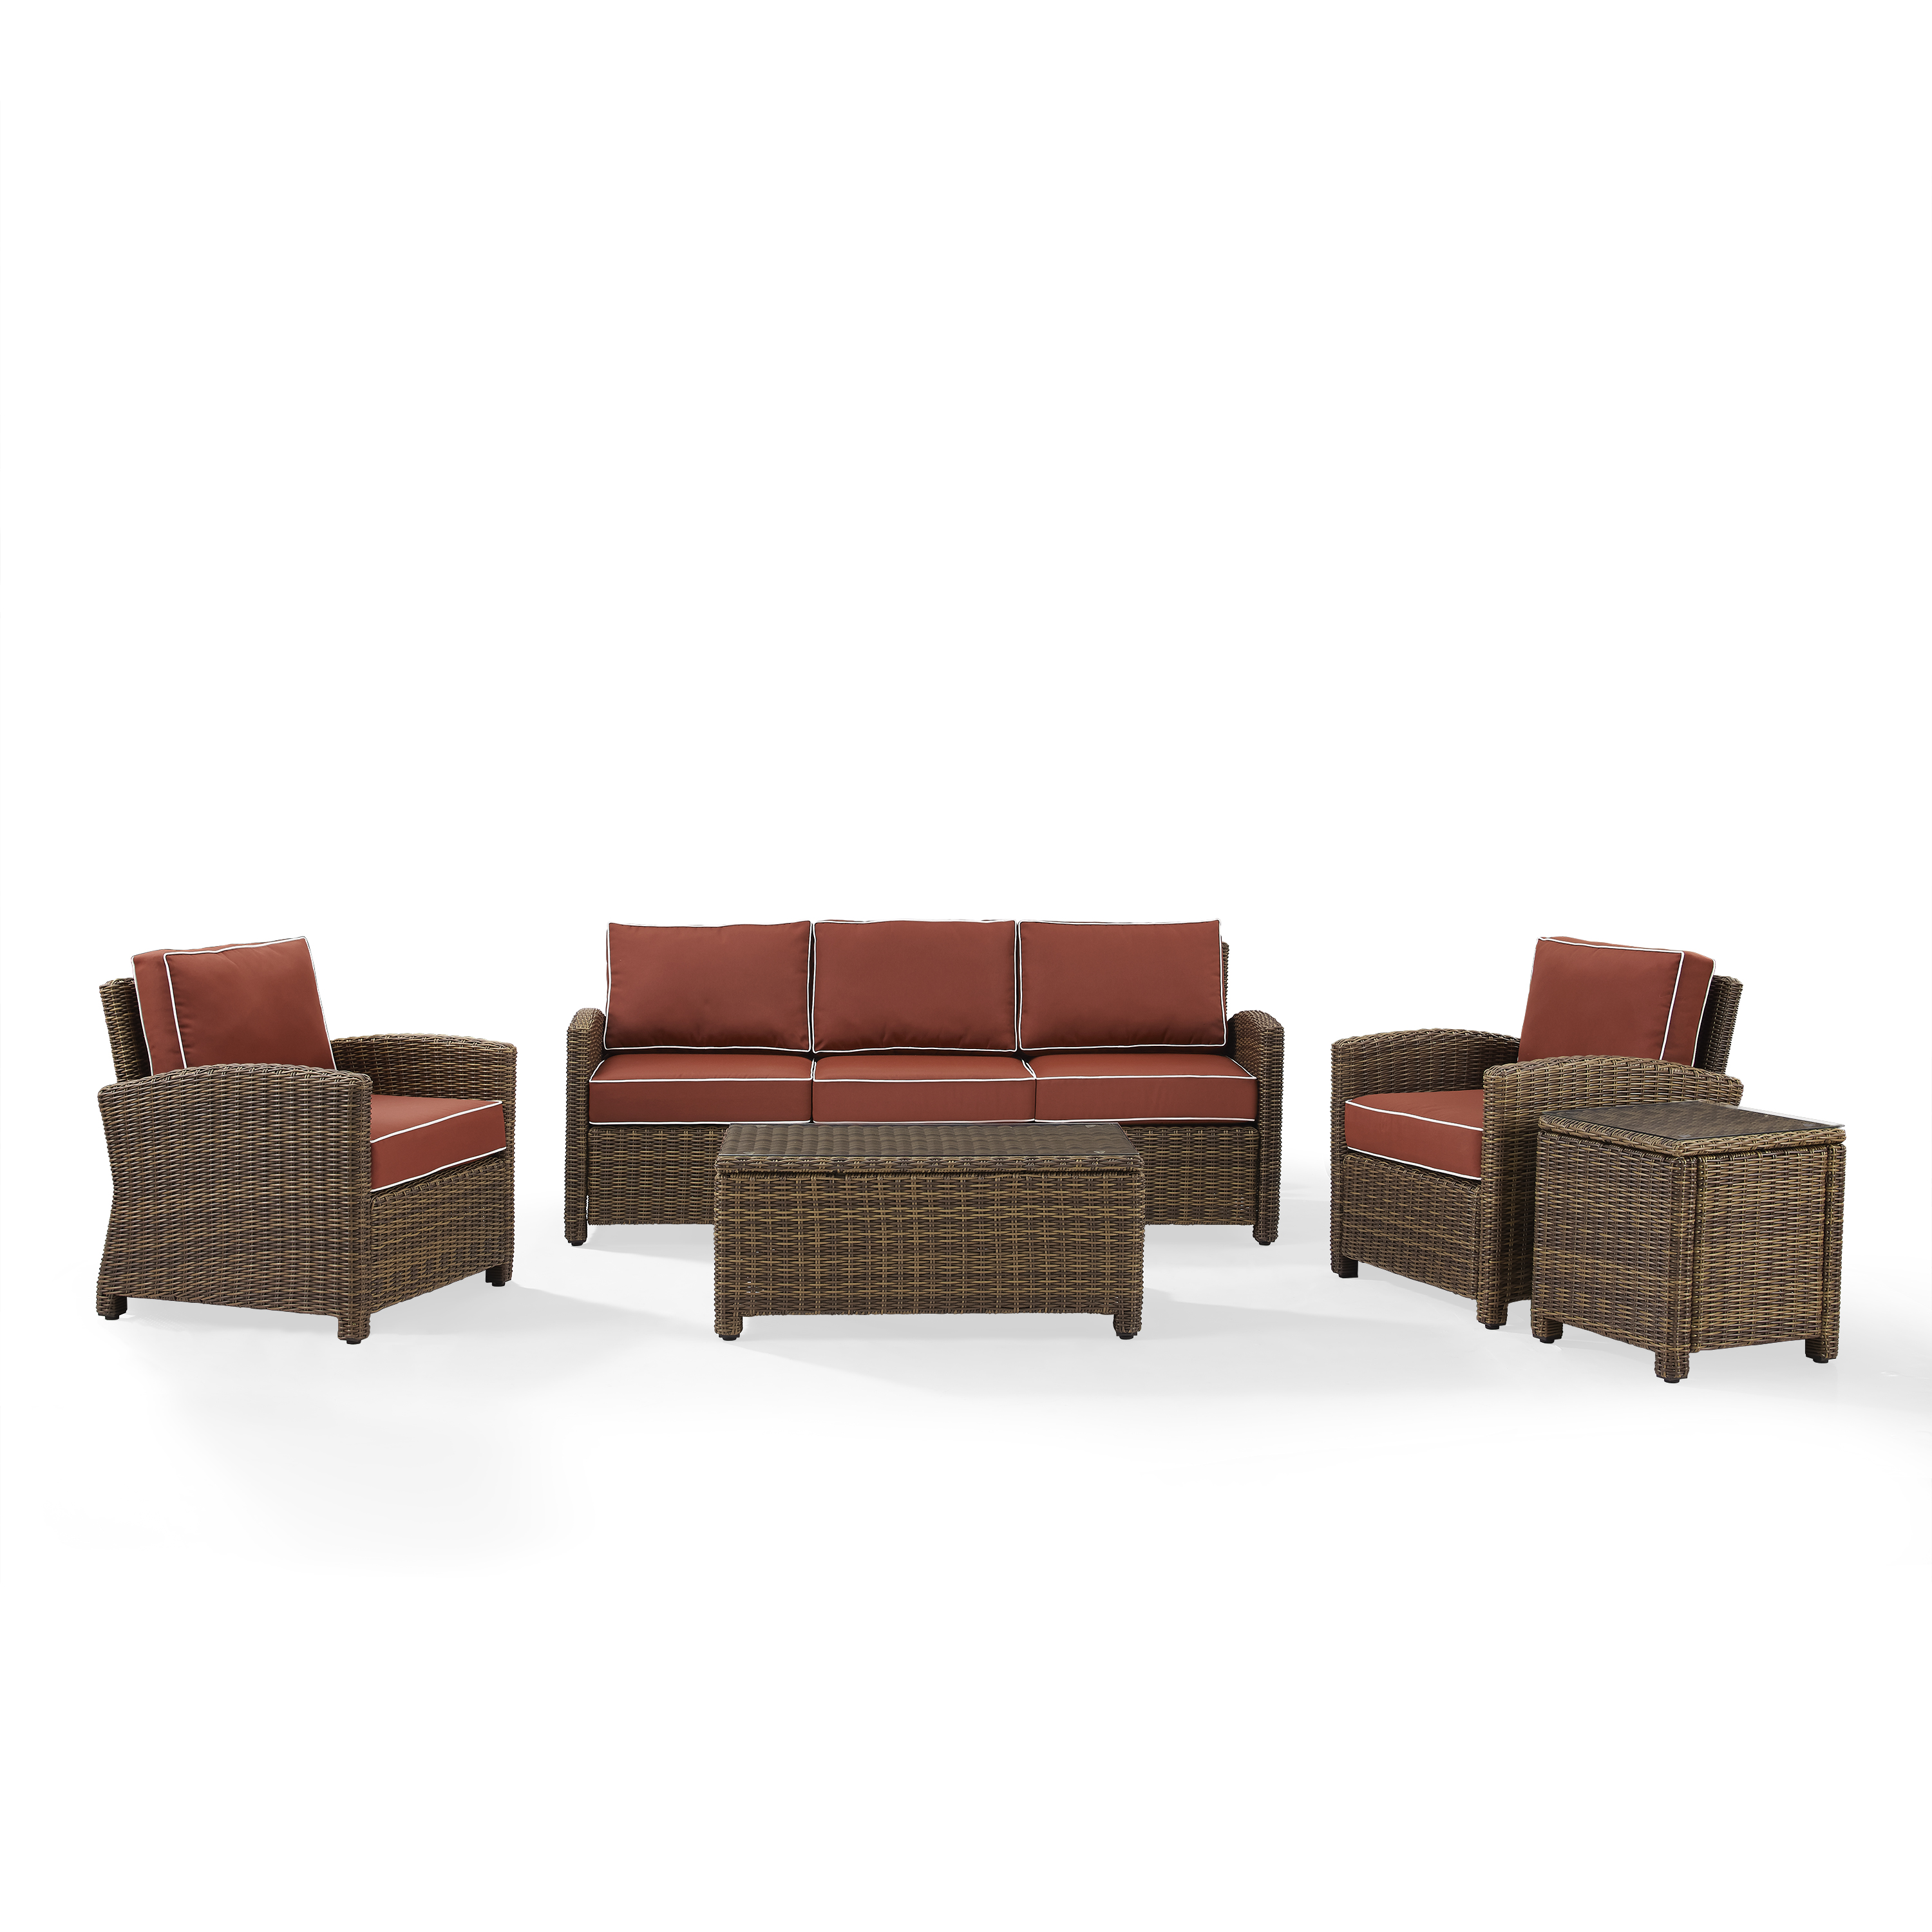 Crosley Furniture Crosley Bradenton 5 Piece Wicker Patio Sofa Set in Brown and Sangria